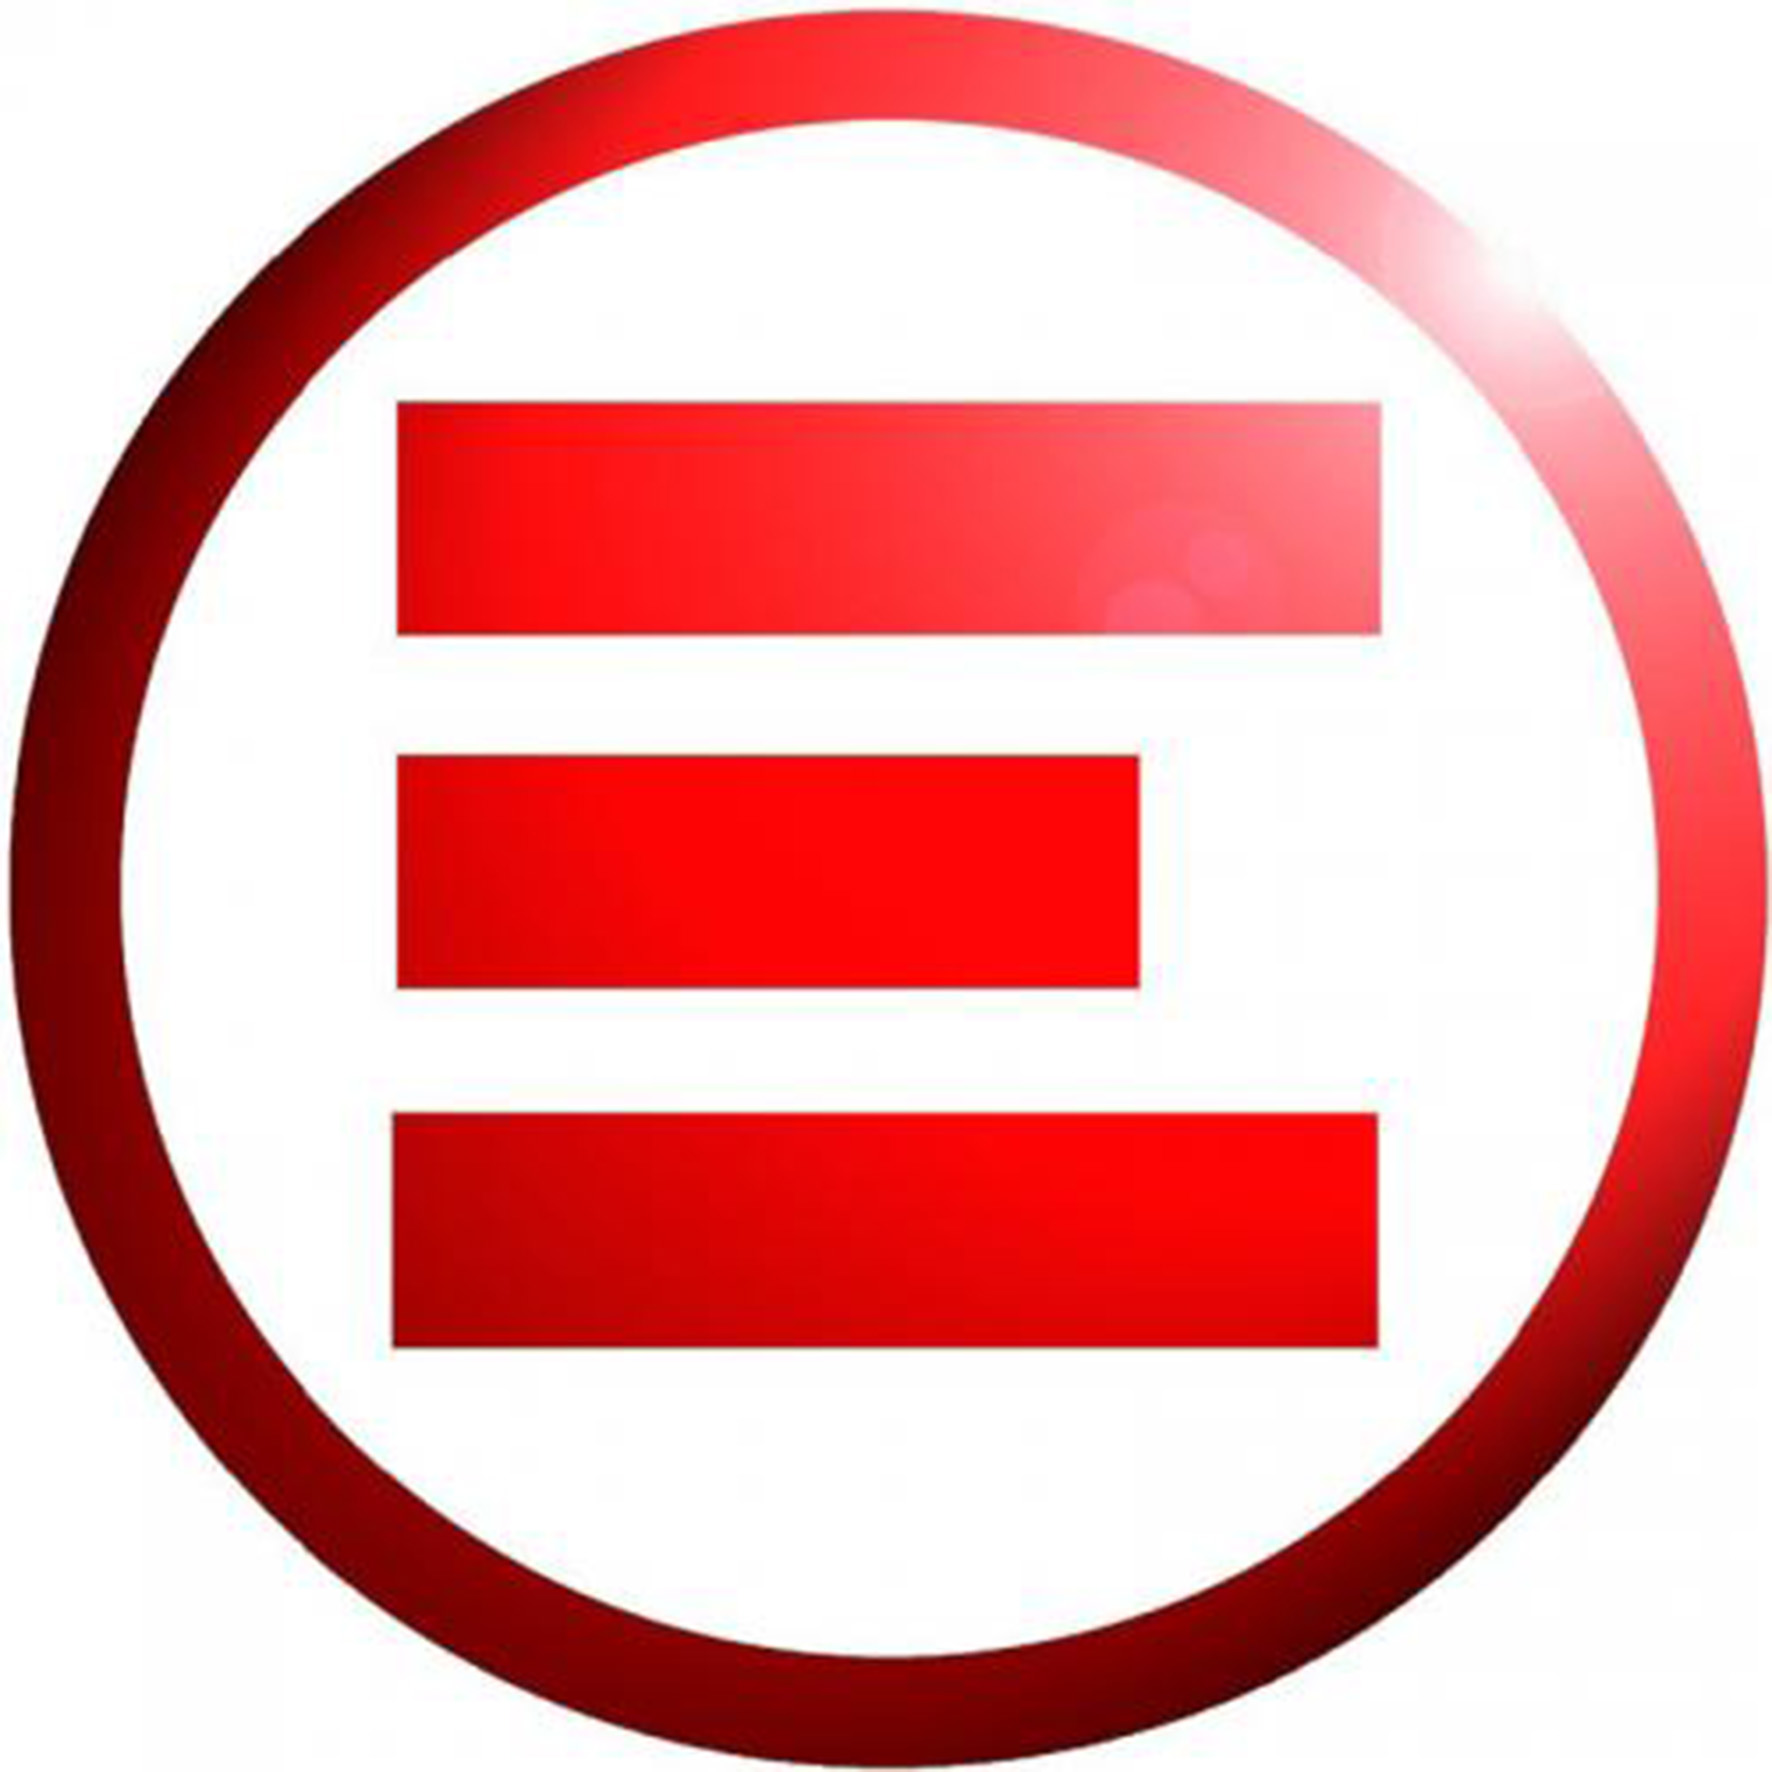 Il noto logo di Emergency © Emergency